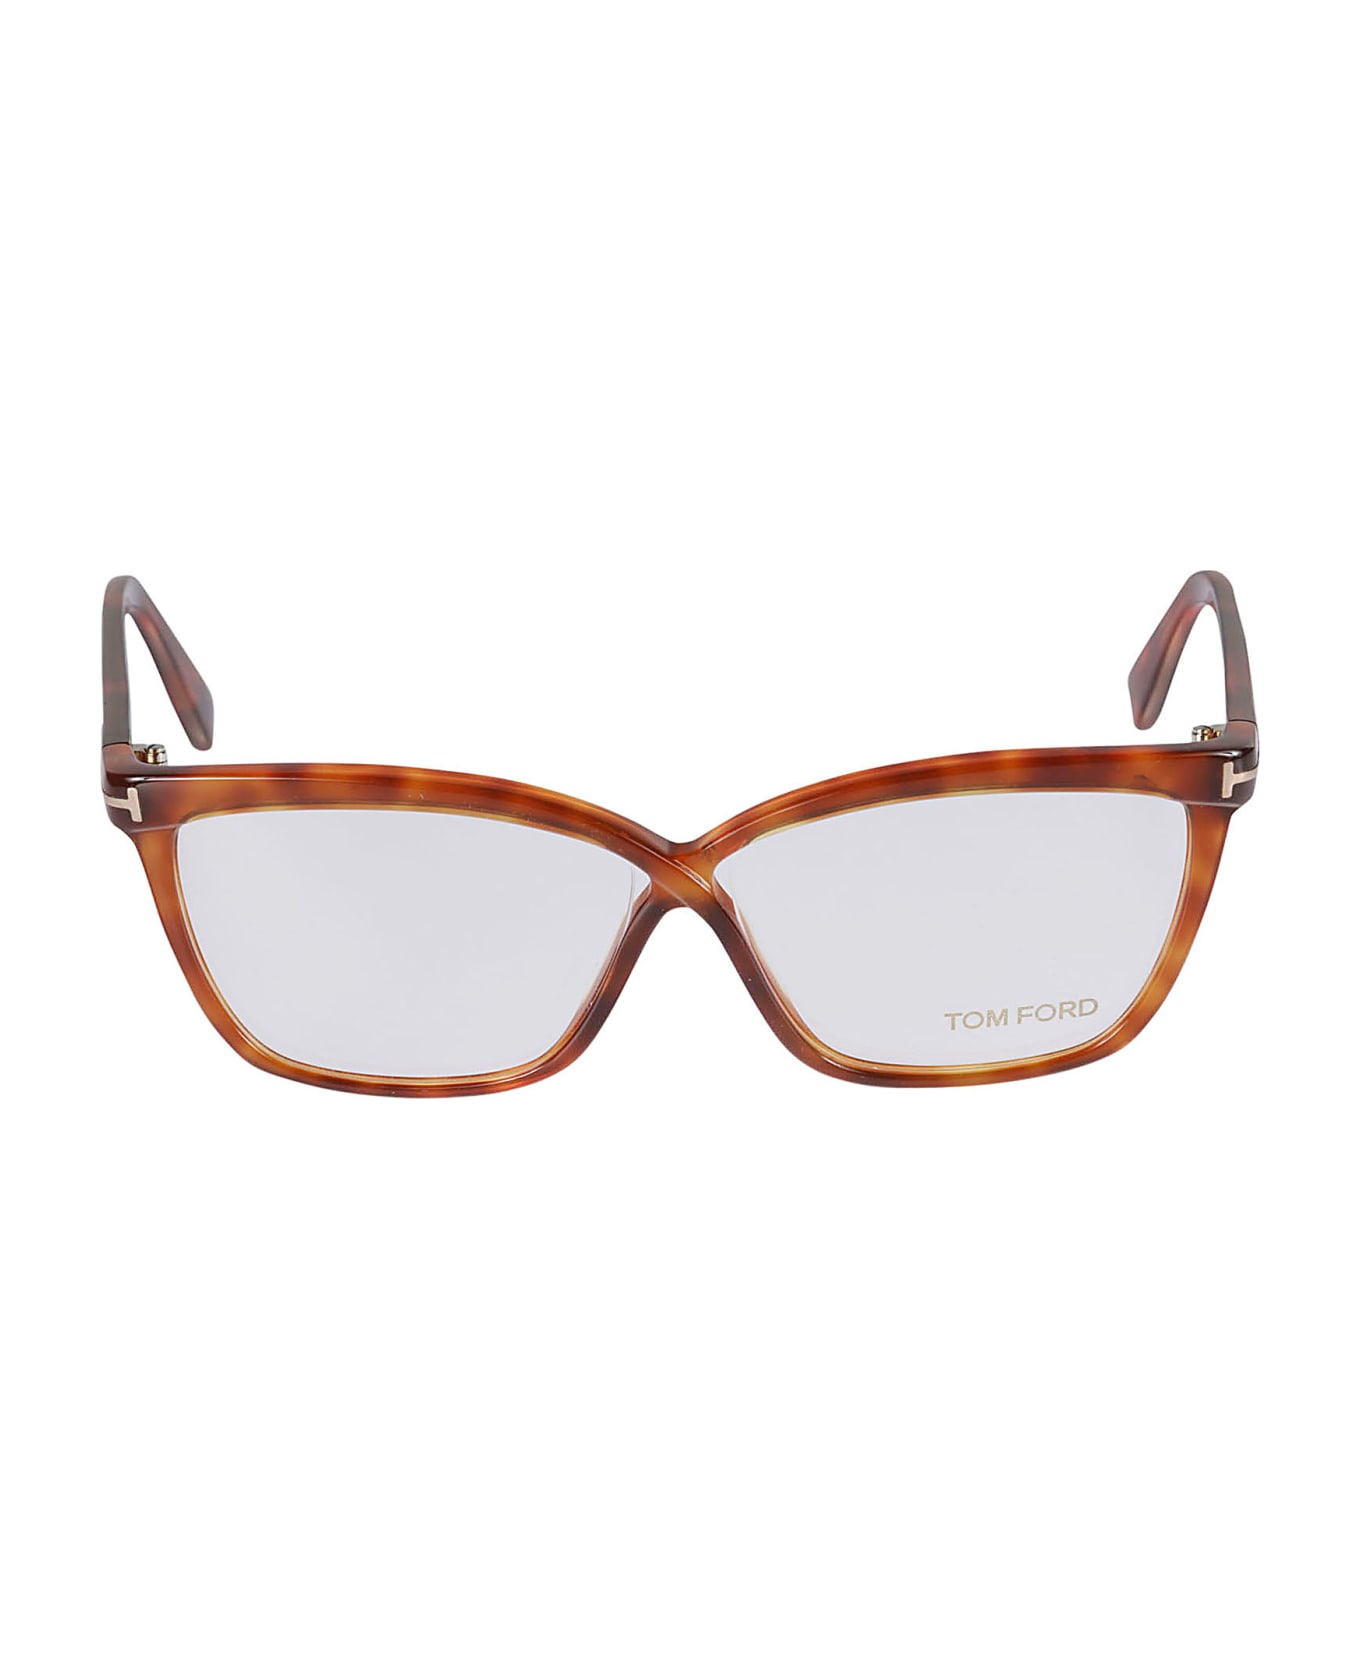 Tom Ford Eyewear Cross-bridge Clear Lens Glasses - 053 アイウェア